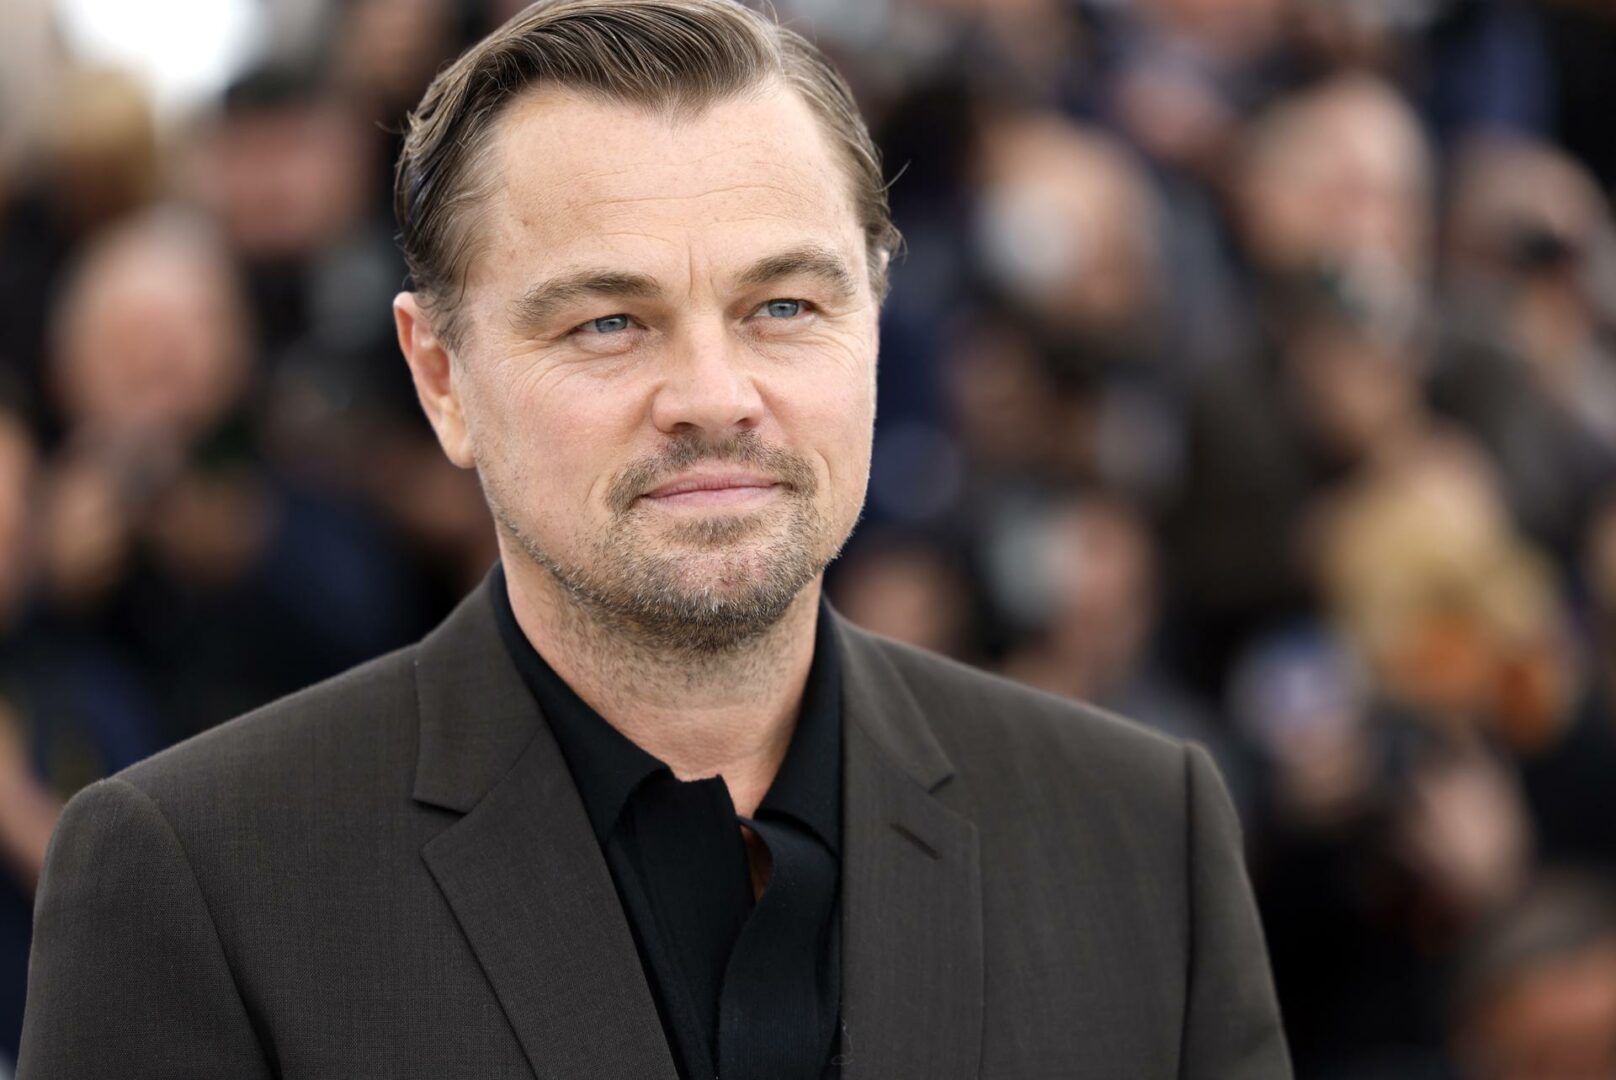 Buscan actores latinos para película de Leonardo DiCaprio en California